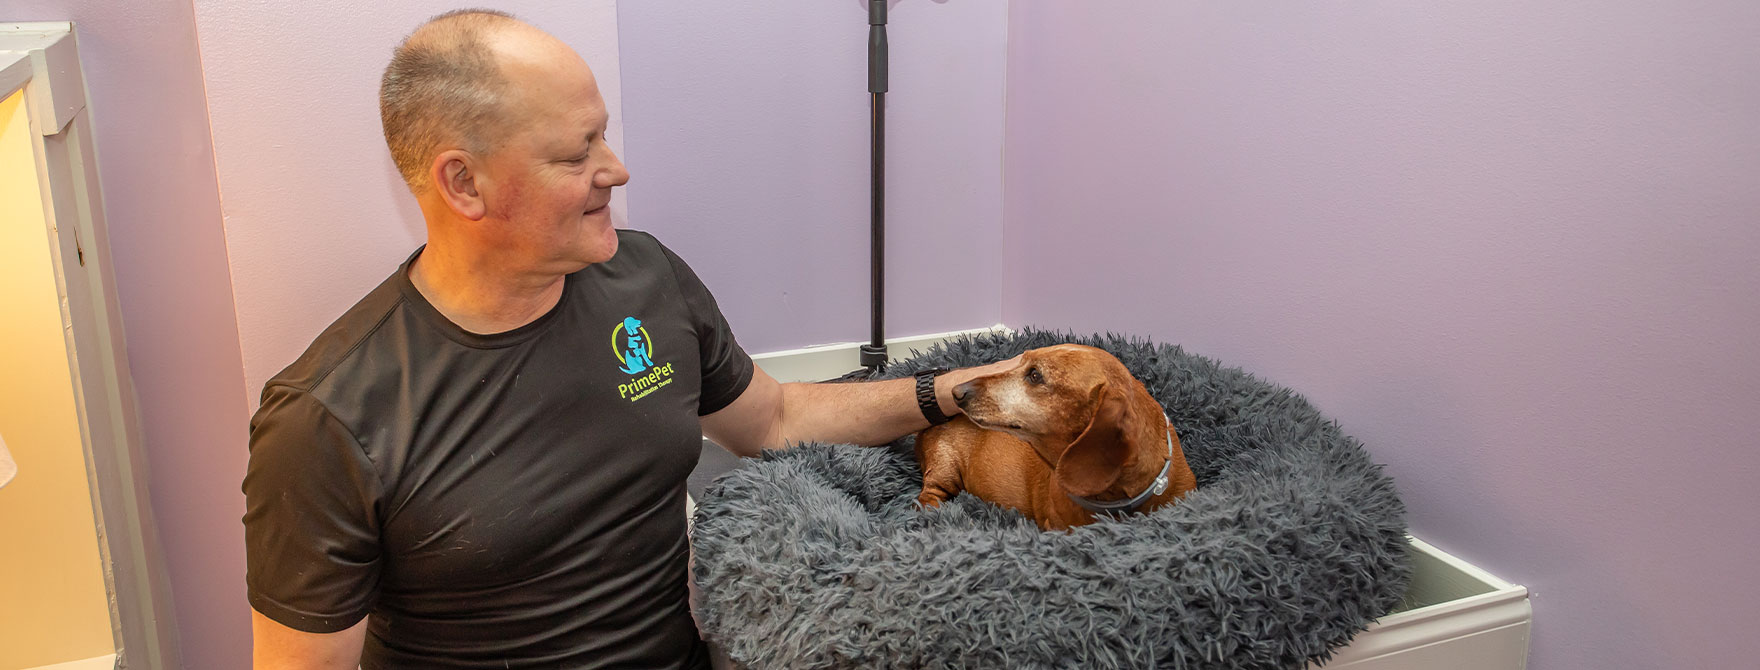 Prime Pet Rehabilitation Therapy